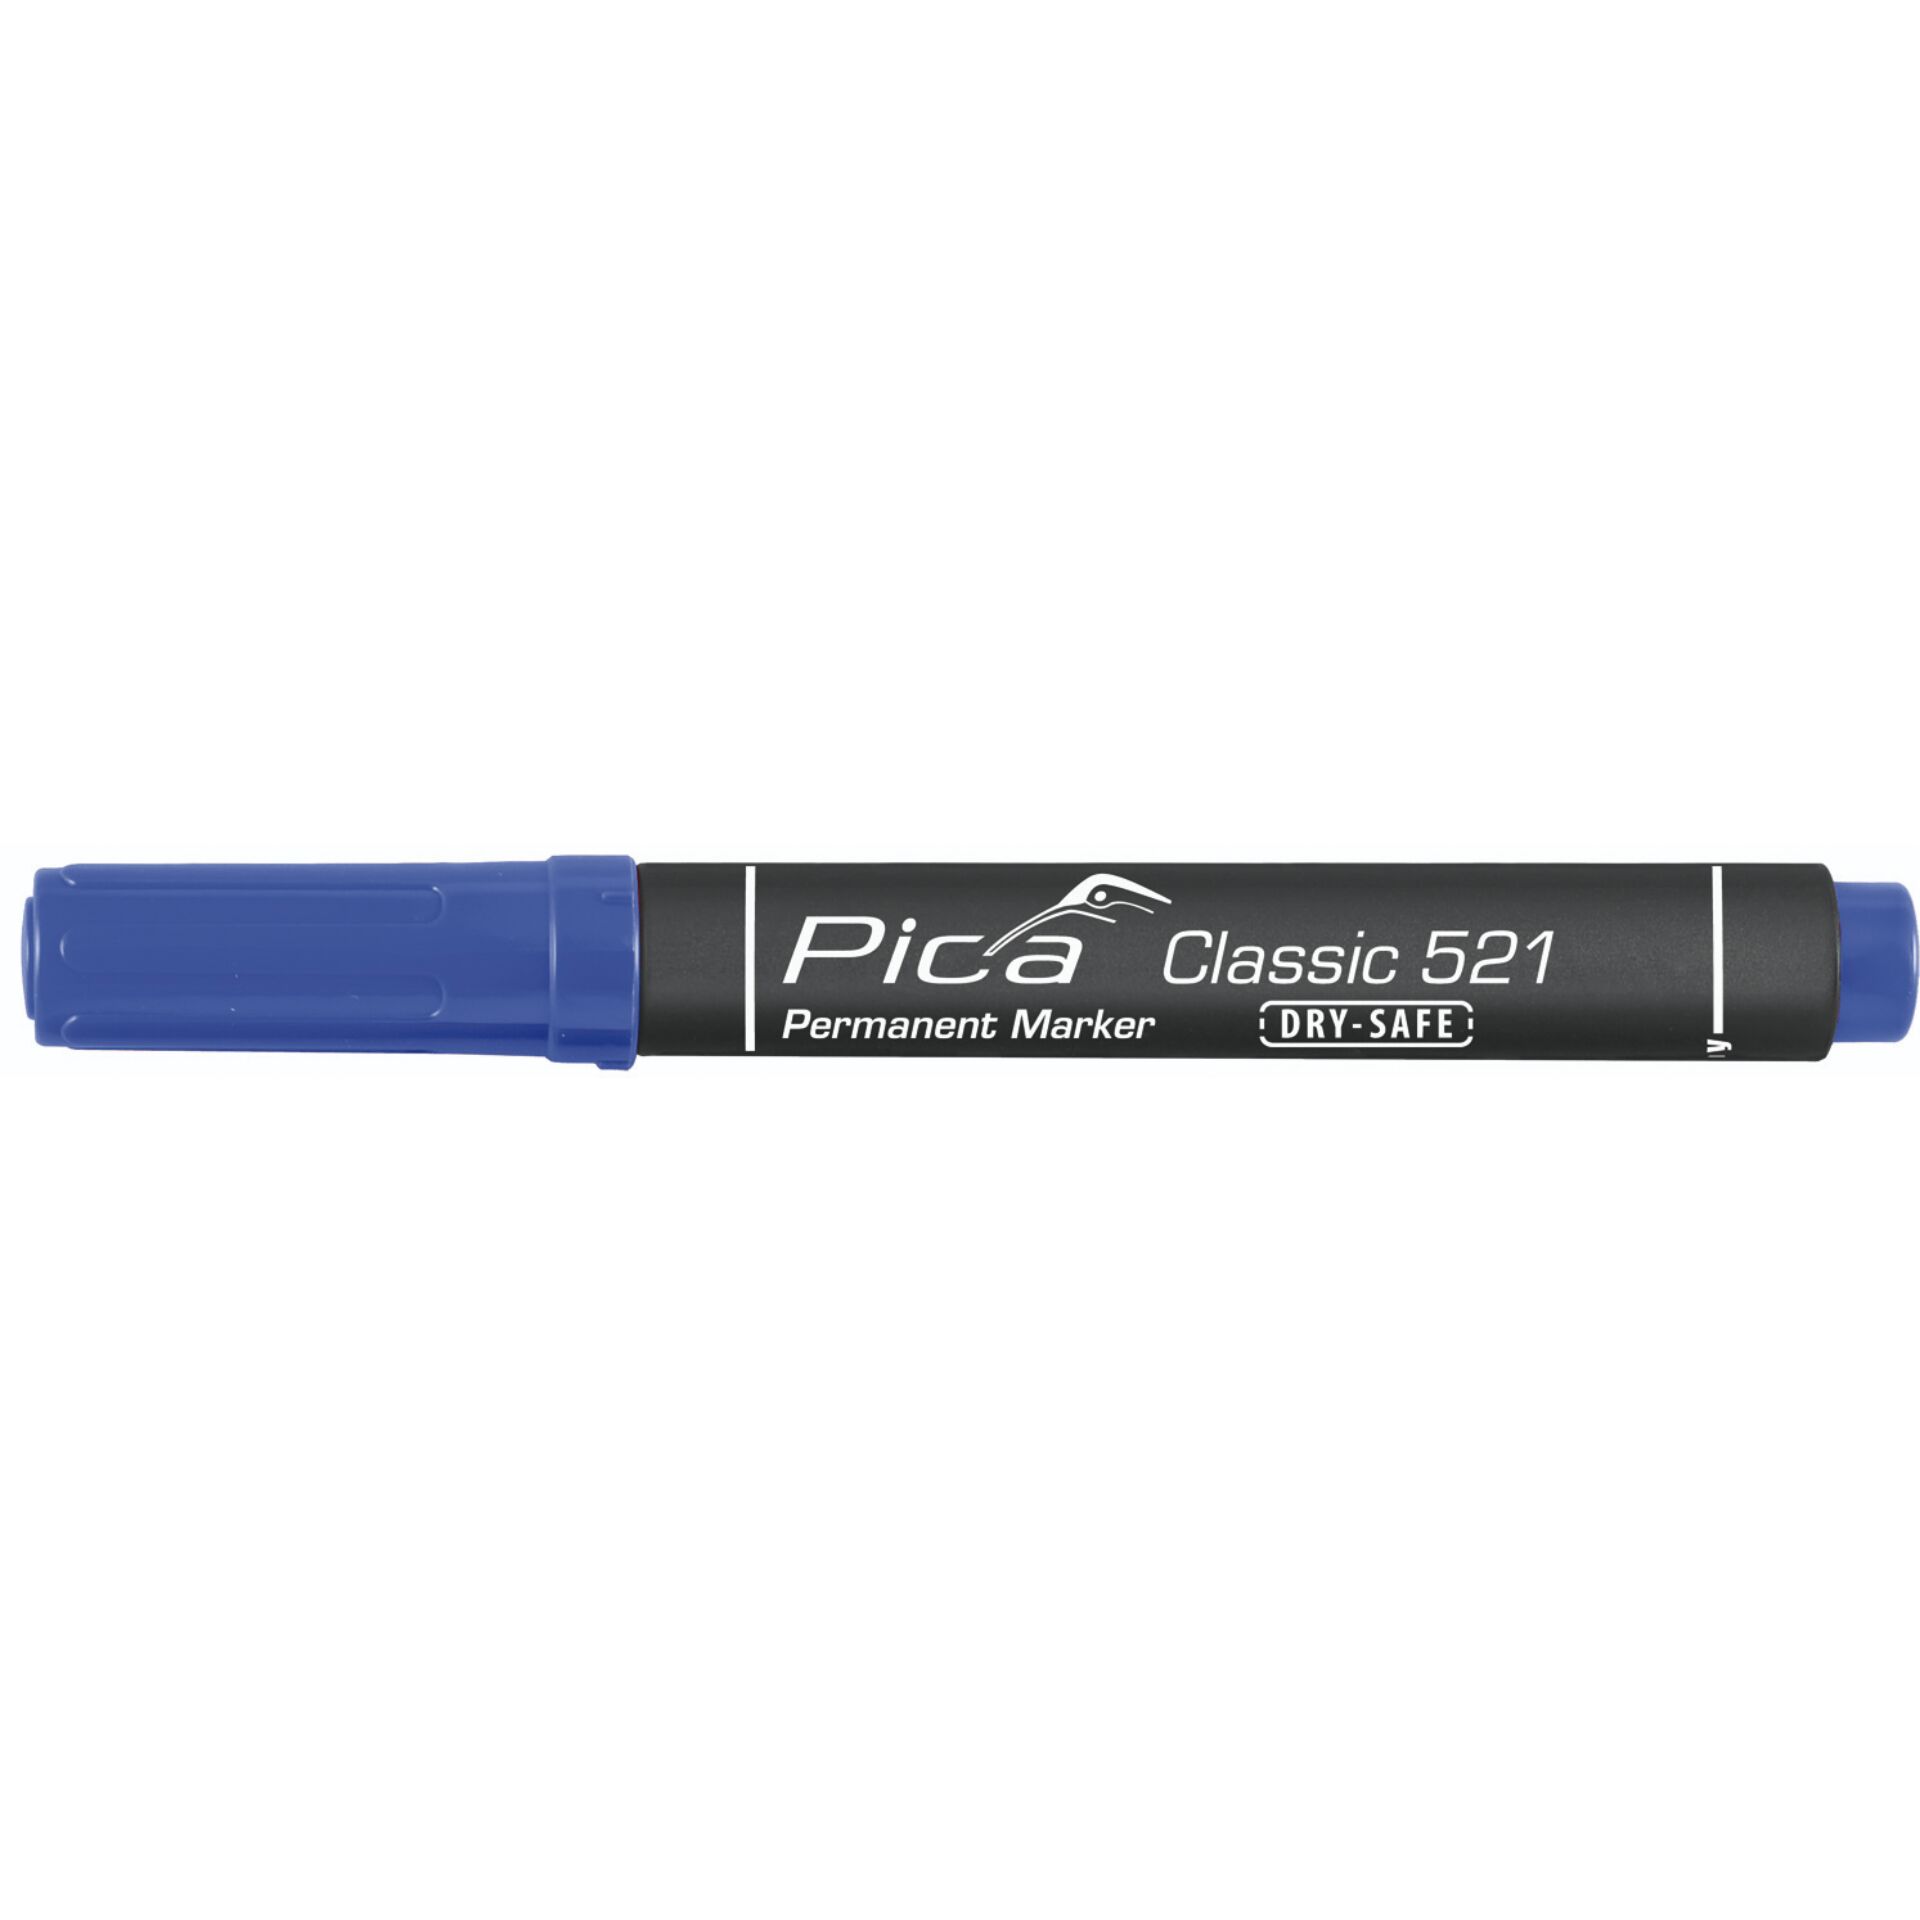 Pica Permanentmarker 2-6mm, Keil spitze, blau